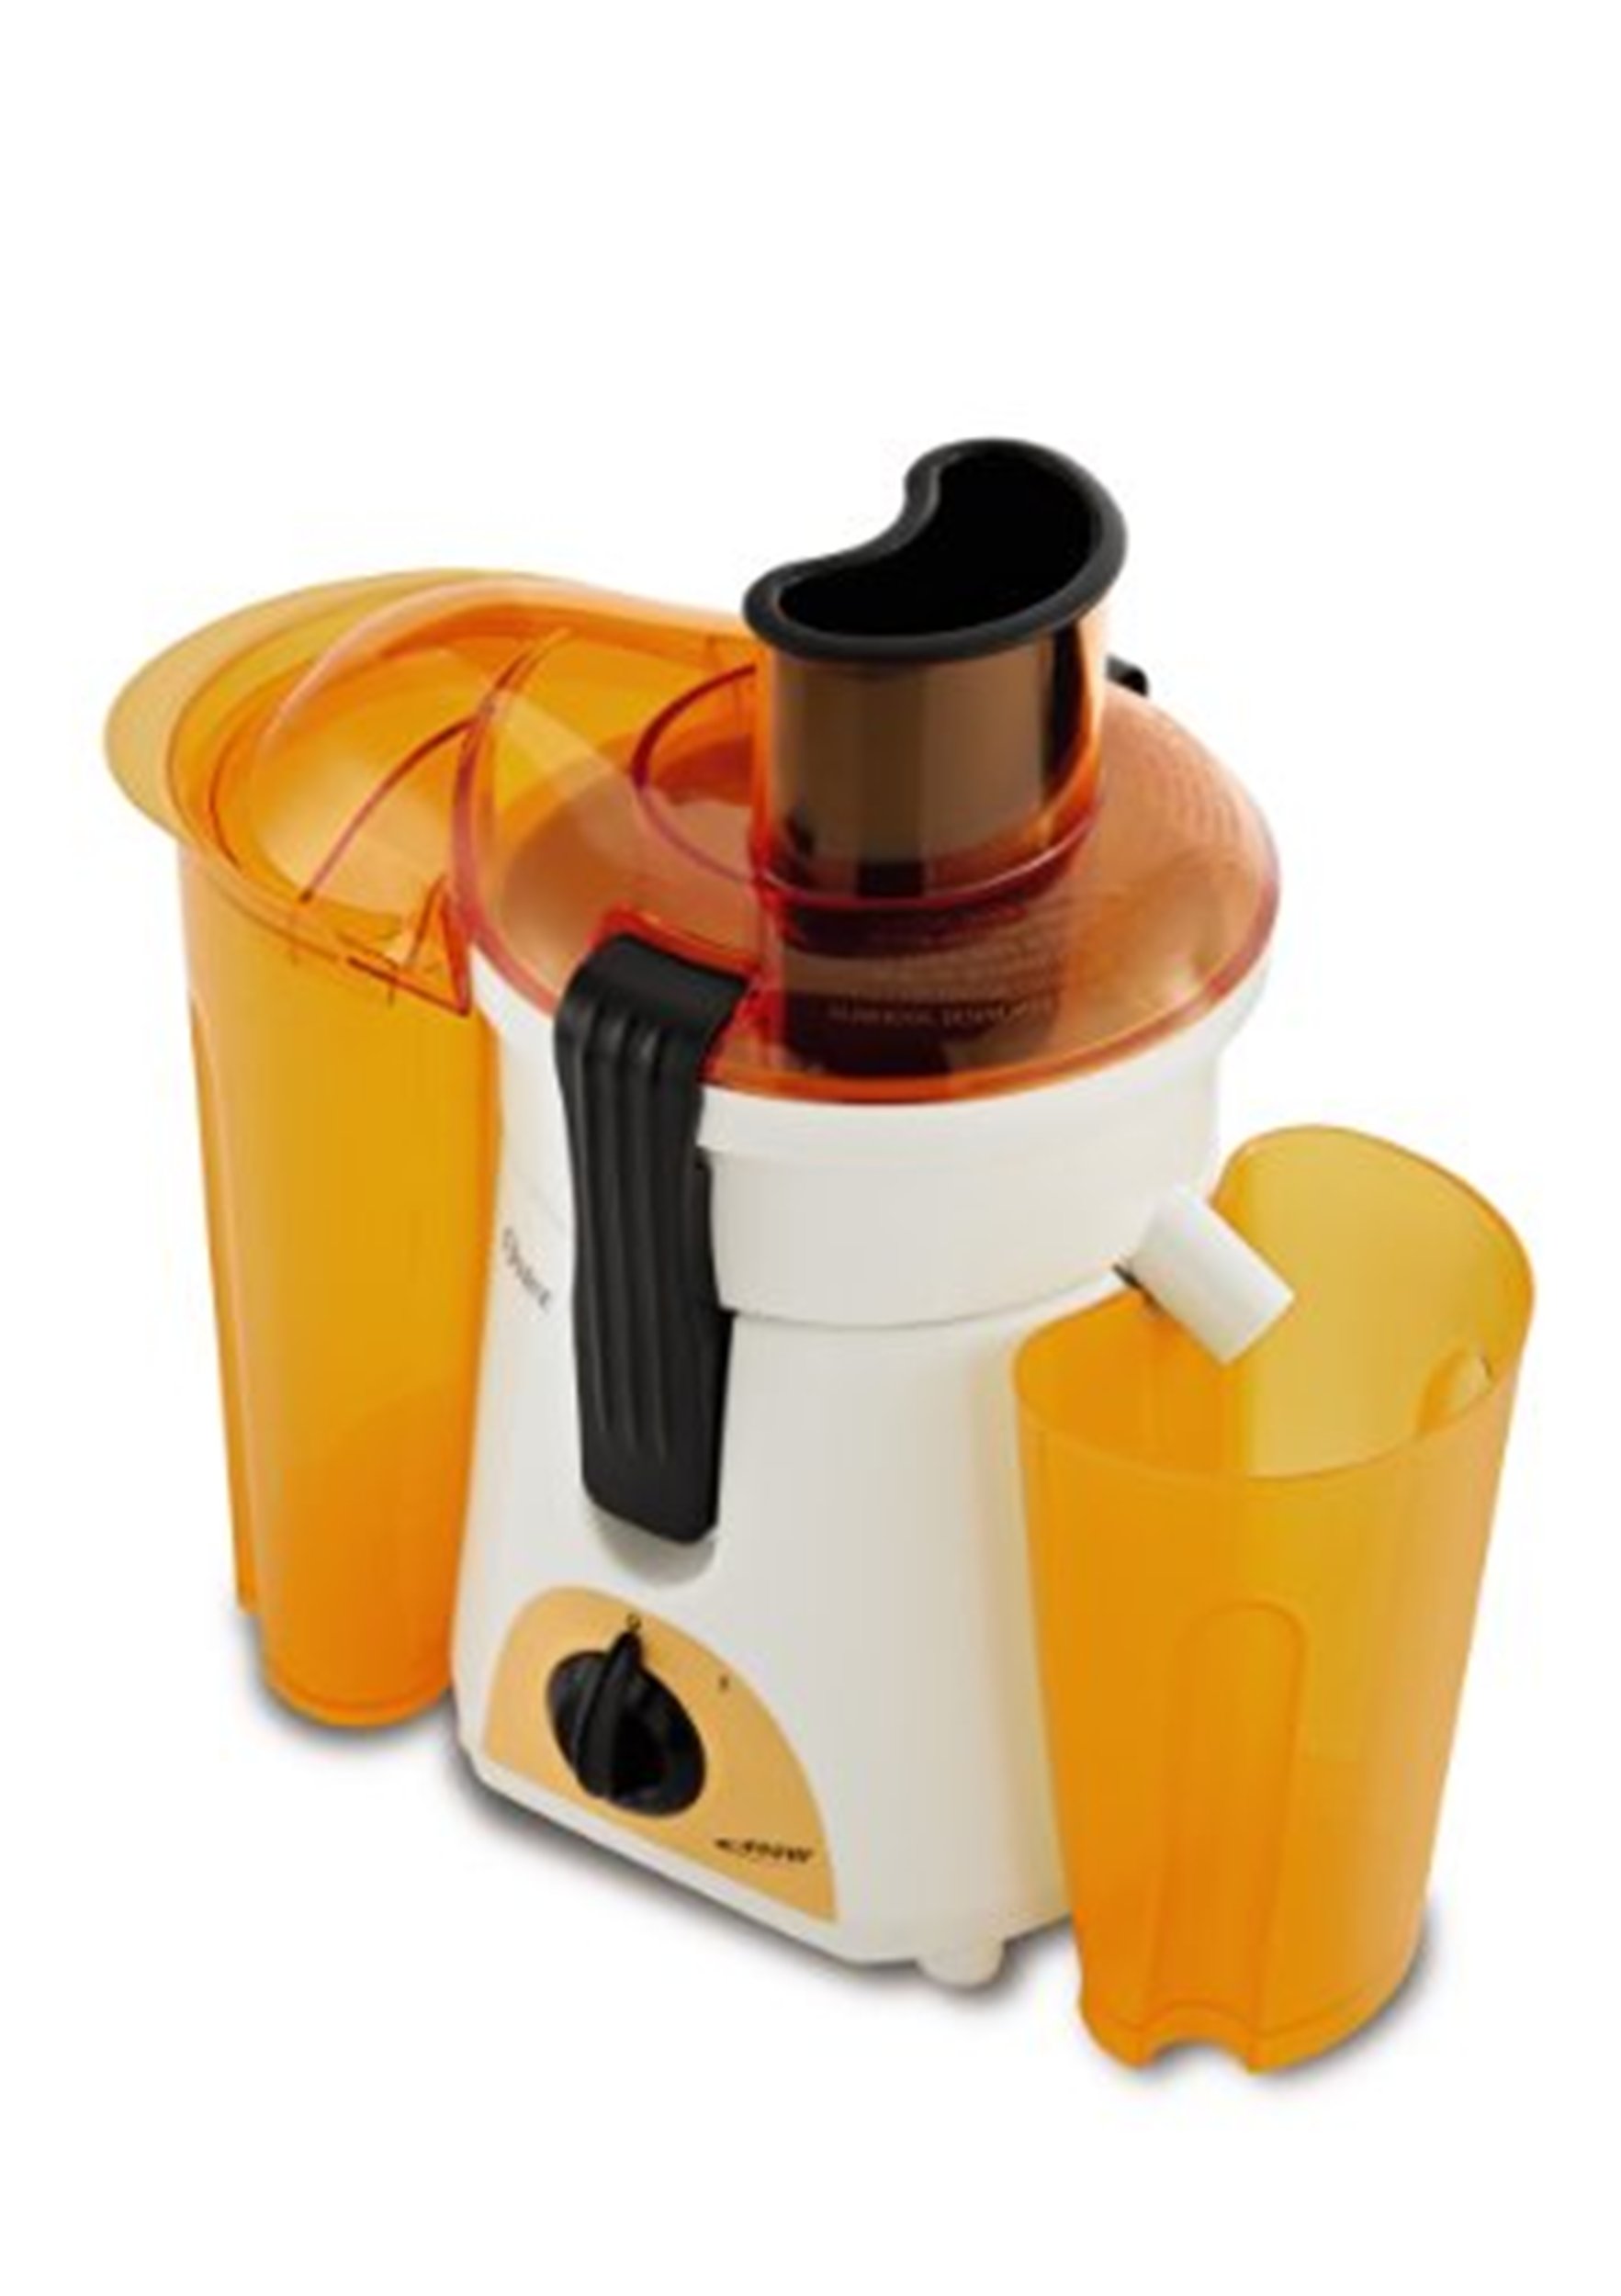 Oster Compact 400 Watt Juice Extractor, Orange   Appliances   Small